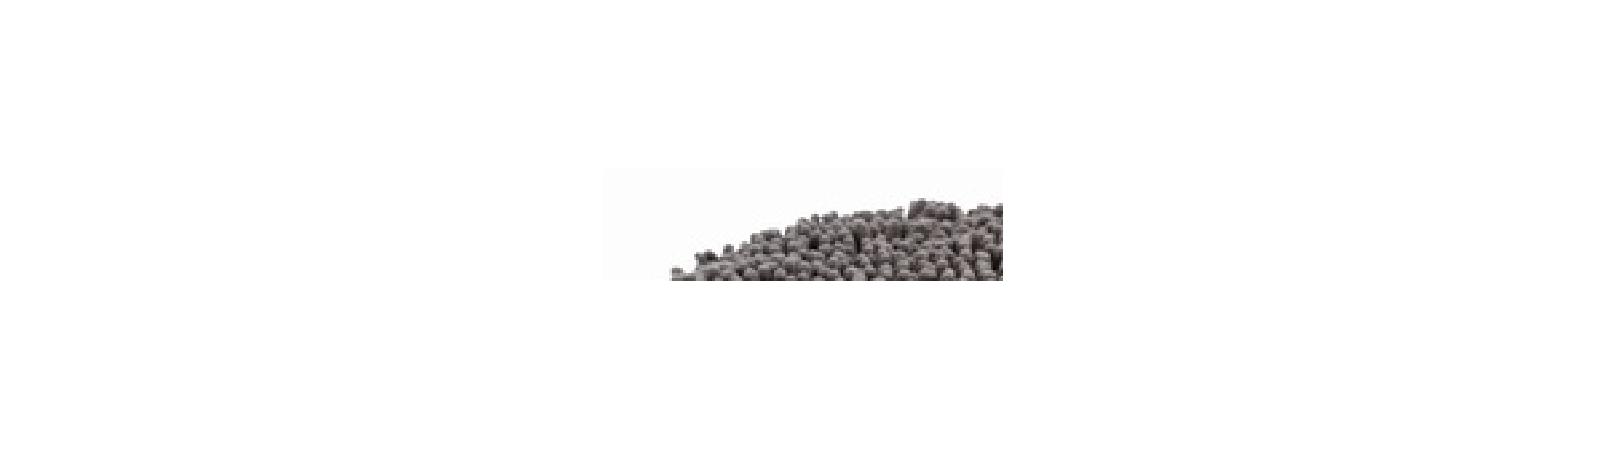 Trixie Грязезащитный коврик для лежака Sleeper 2 56 x 37 см тёмно-серый 28634 0,252 кг 50550